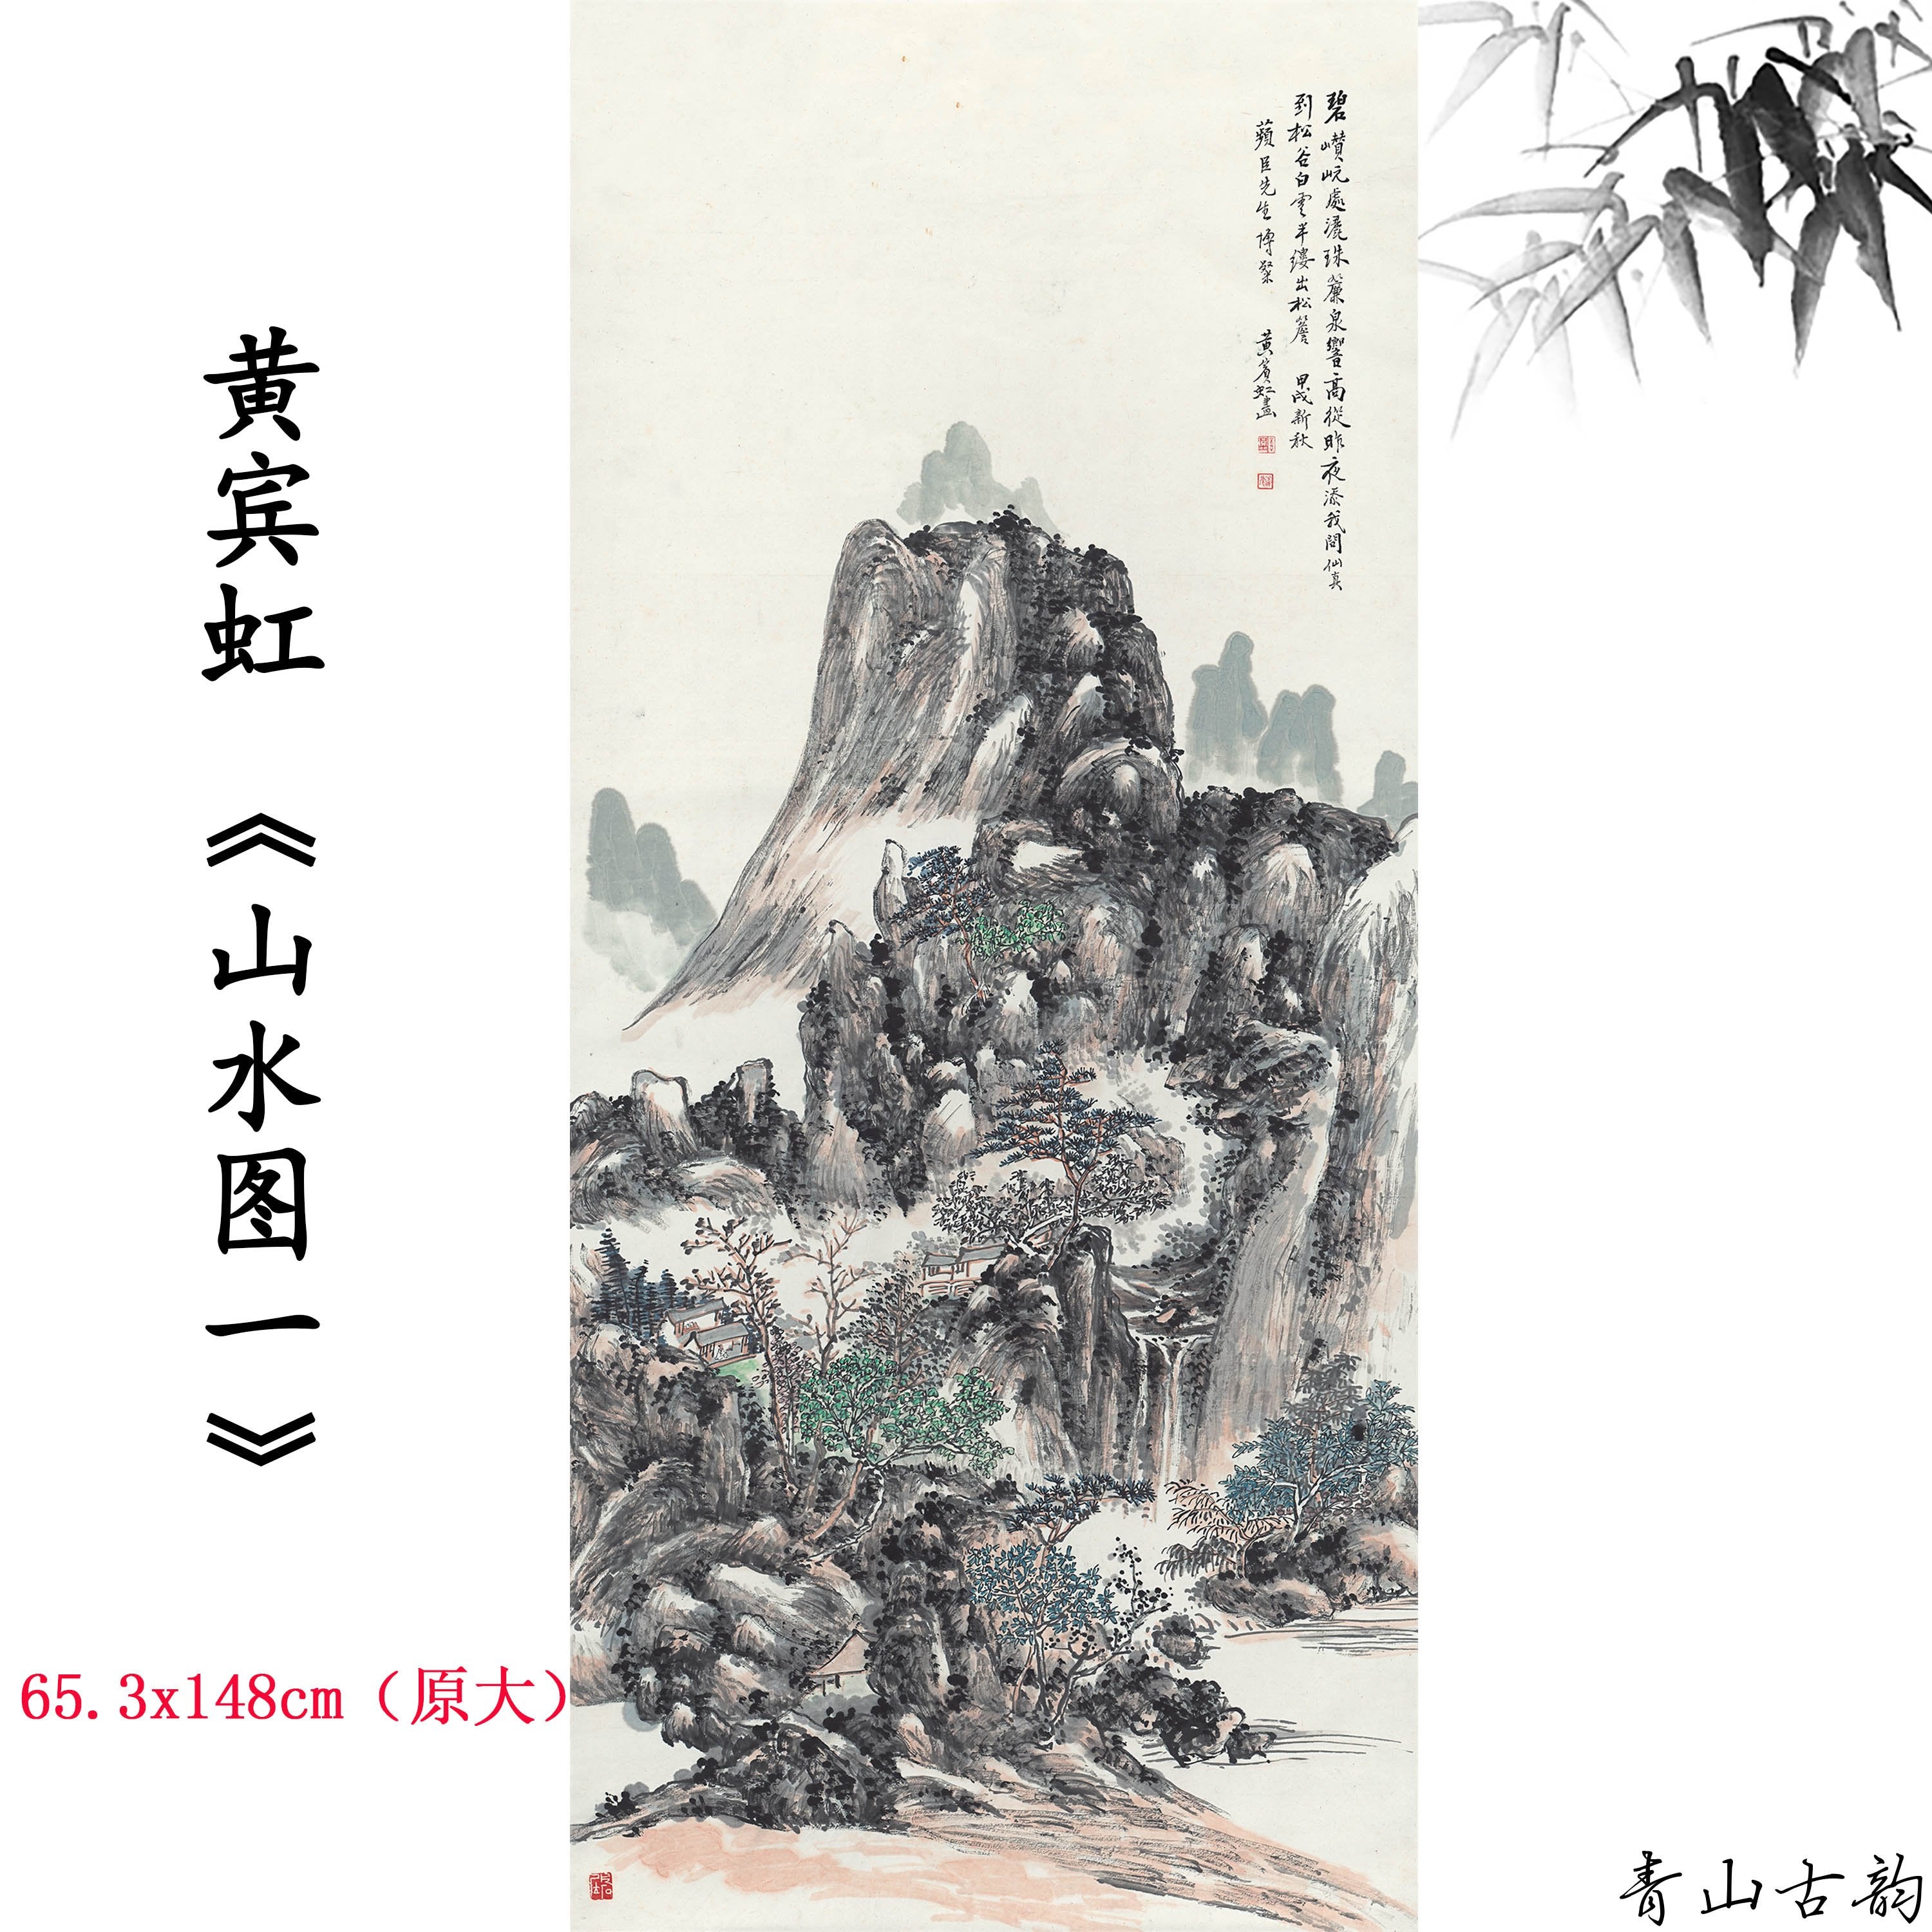 Chinese Antique Art Painting 黄宾虹 山水图 Huang Binhong Shan Shui Landscape